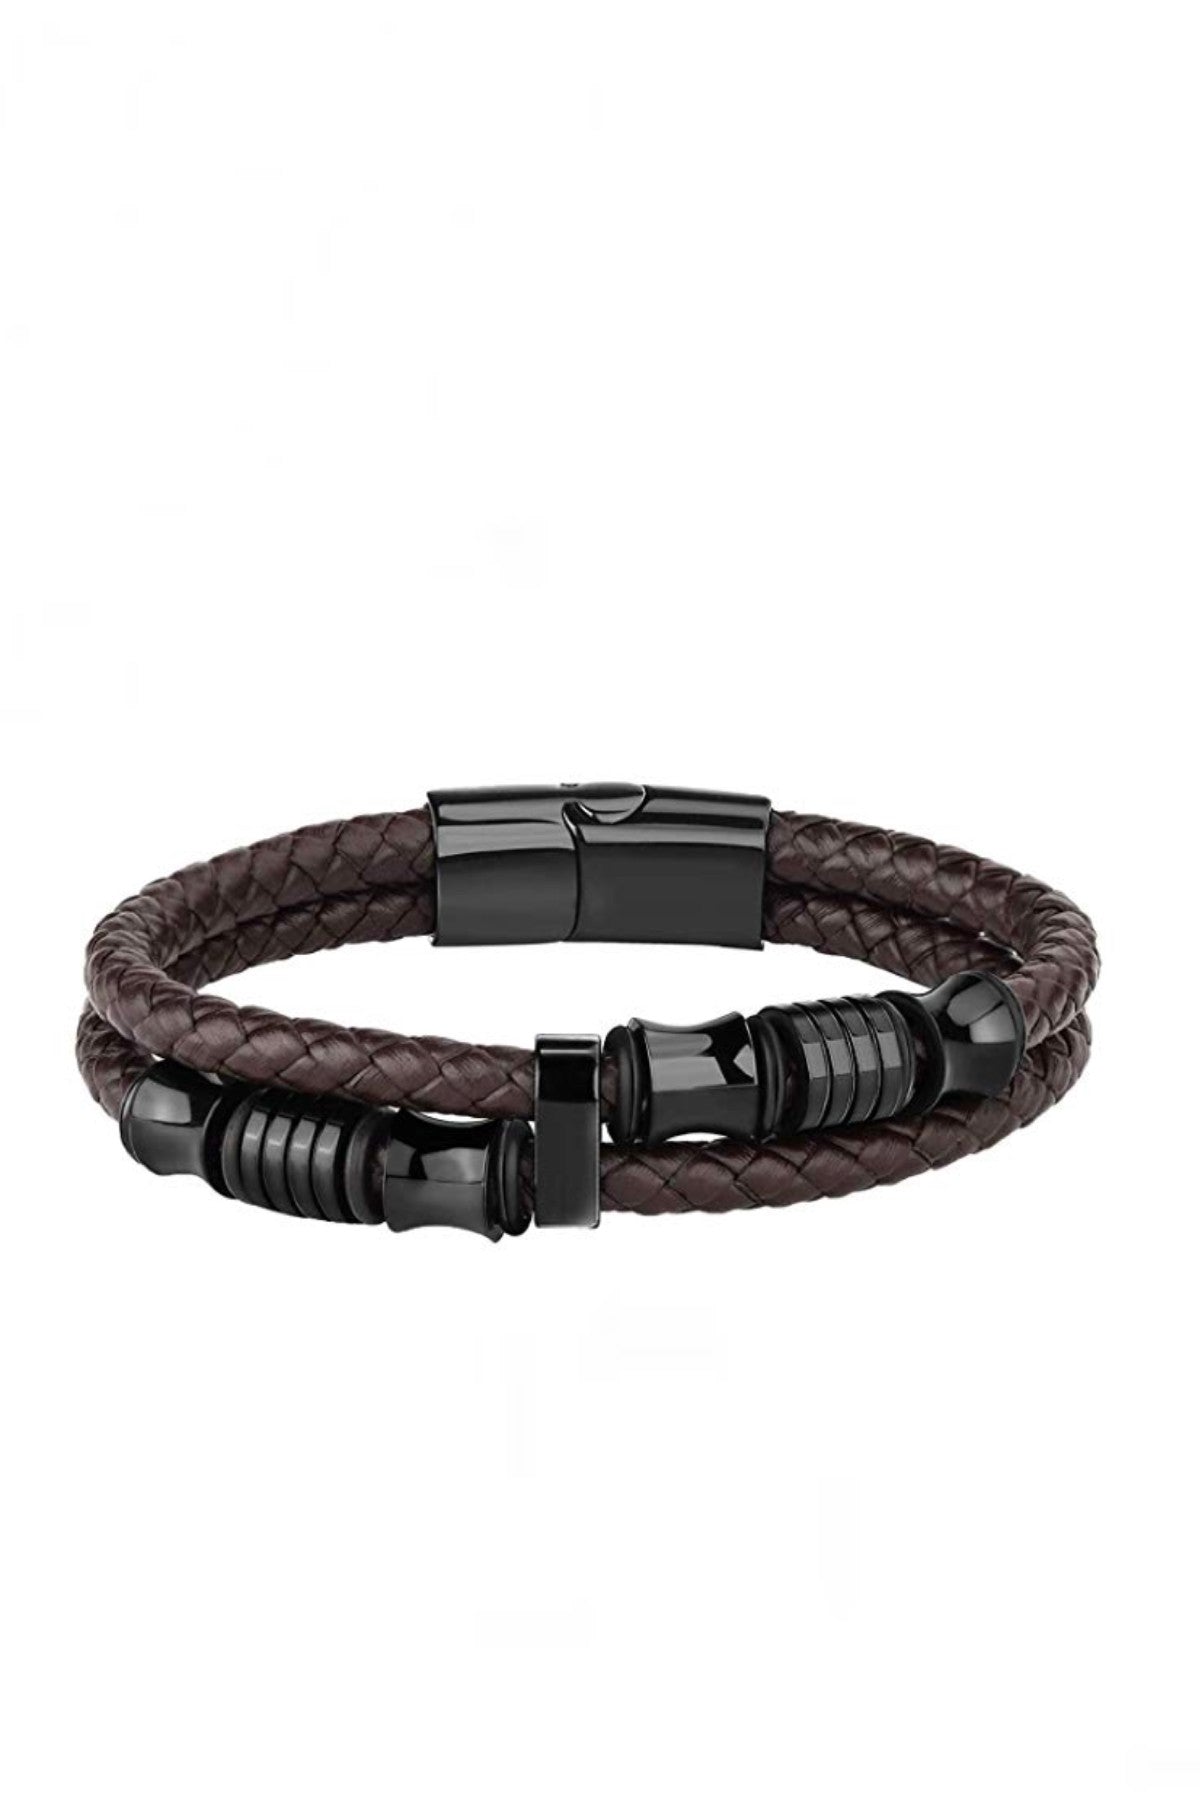 Black Plated & Brown leather Bracelet